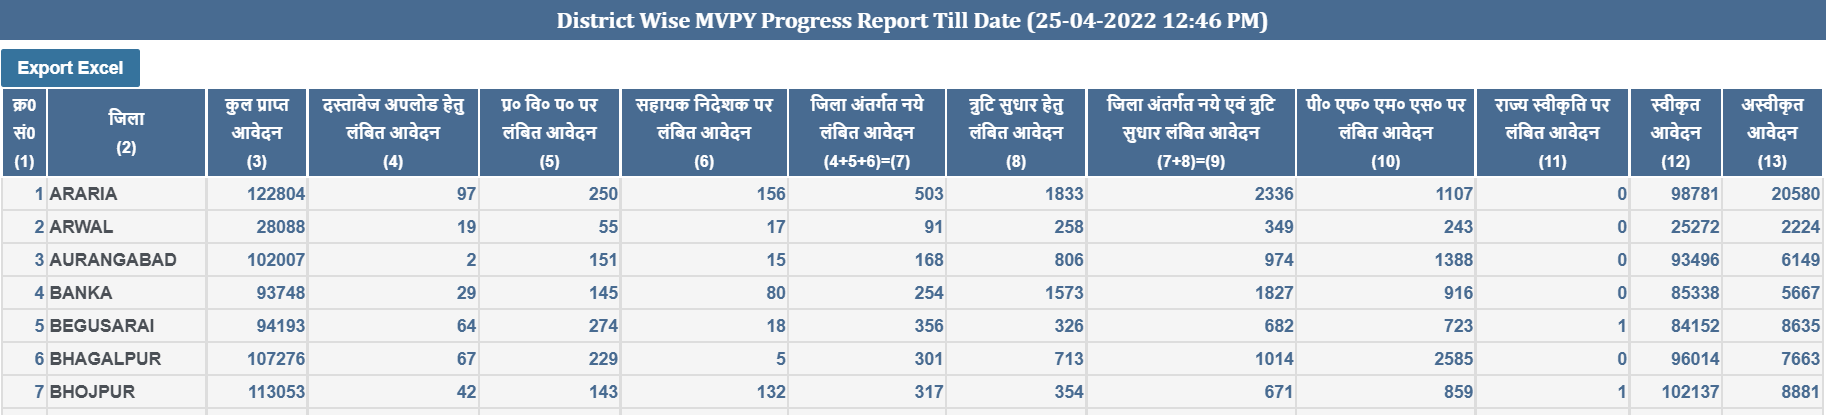 mvpy progress report